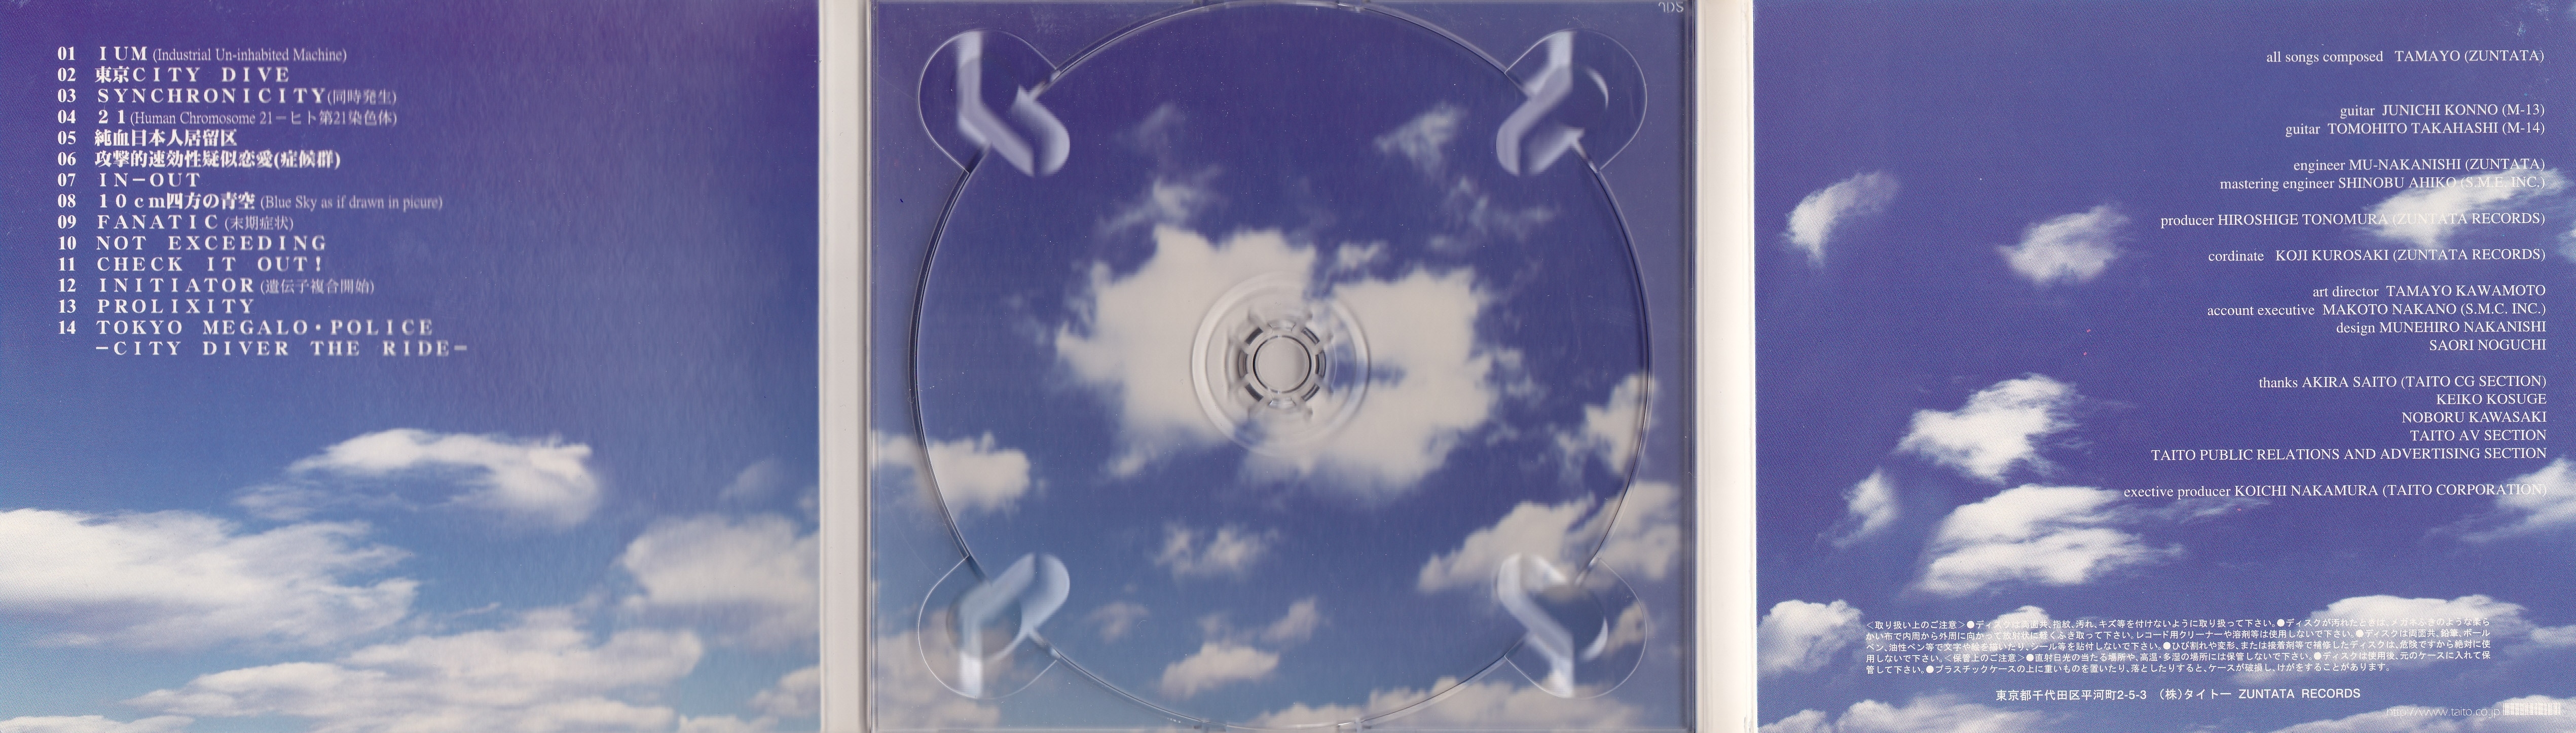 ZUNTATA RARE SELECTION Vol.2 10cm Shihou no Aozora (1998) MP3 